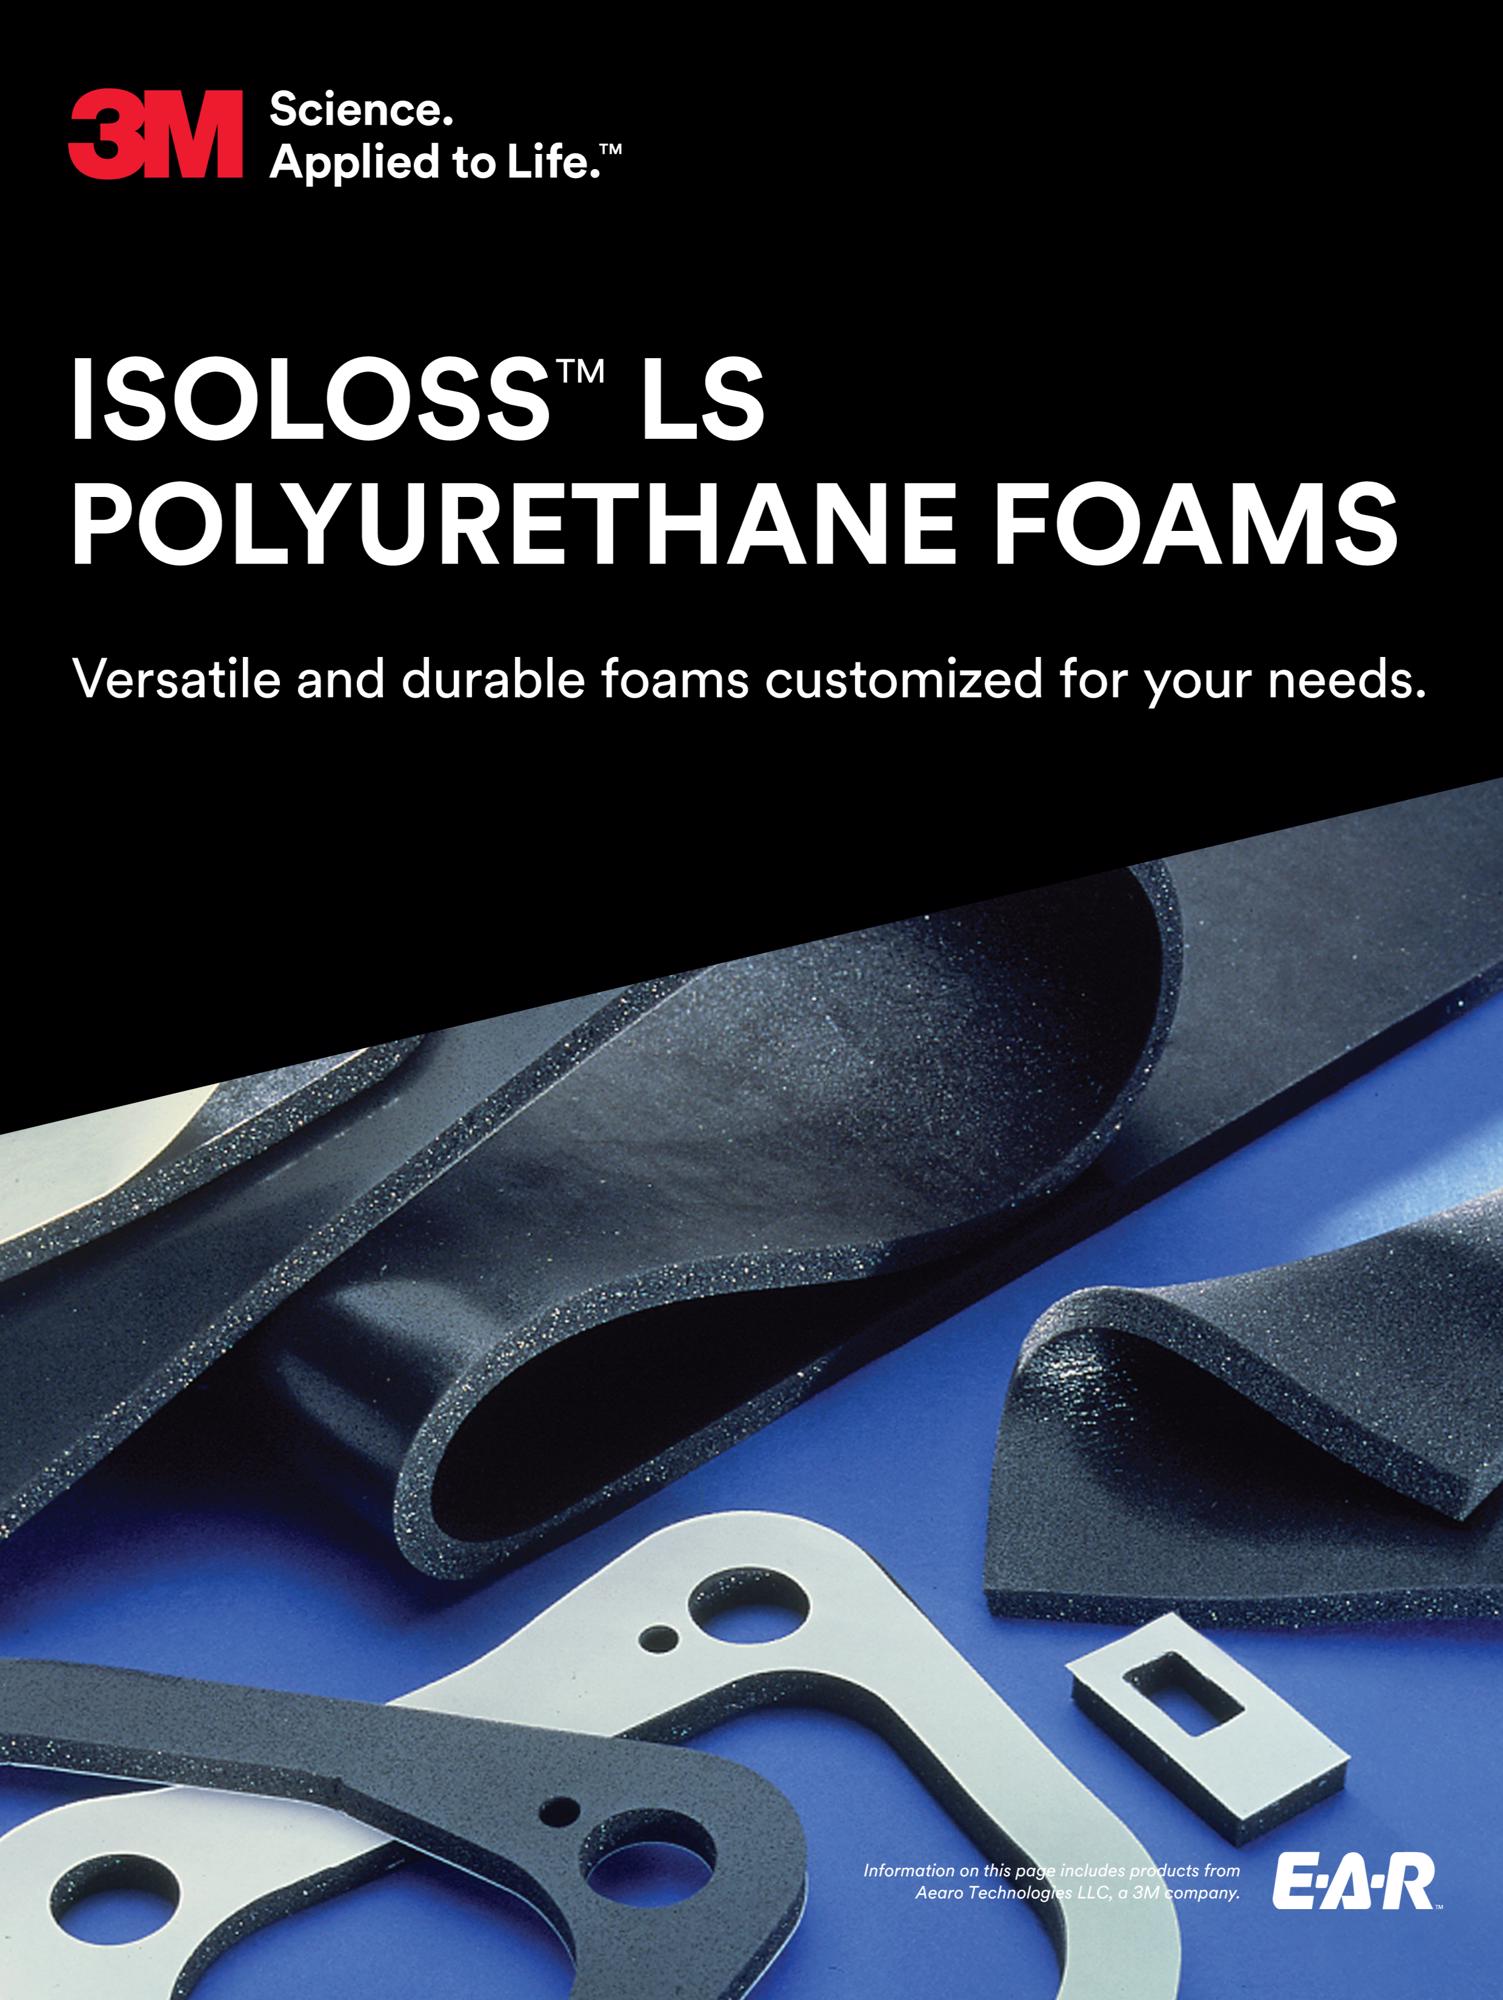 ISOLOSS LS Foams Brochure Image